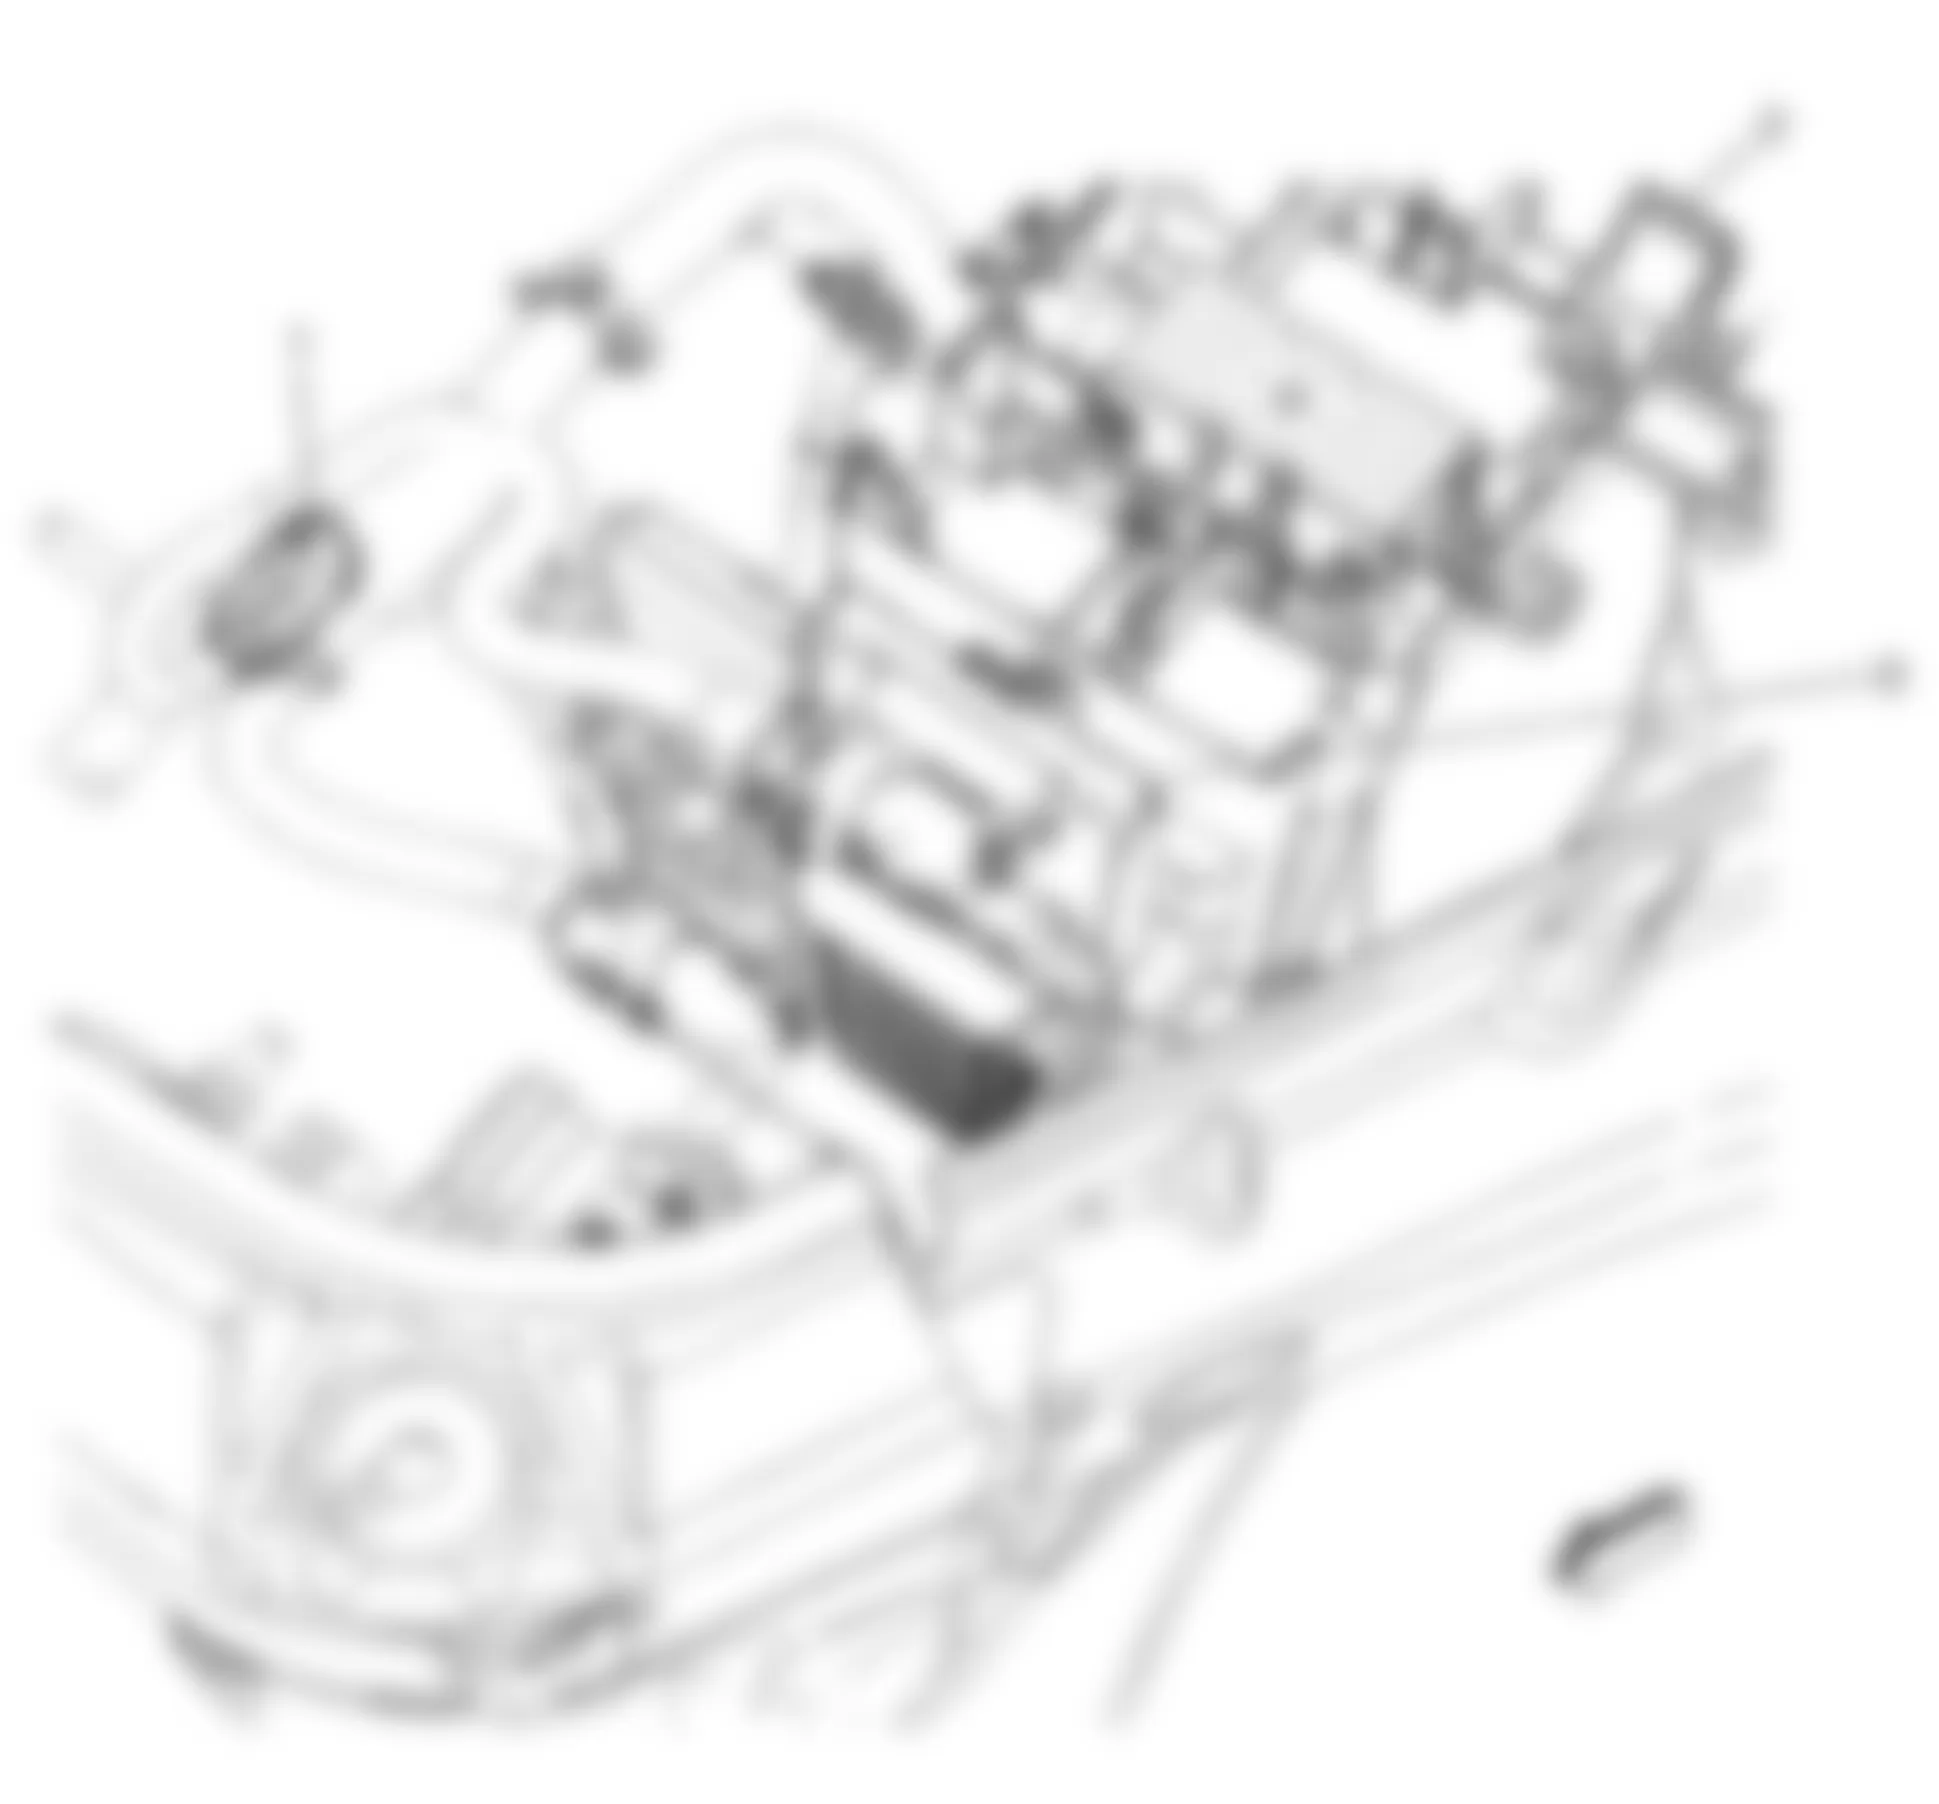 Chevrolet HHR LT 2009 - Component Locations -  Engine Compartment